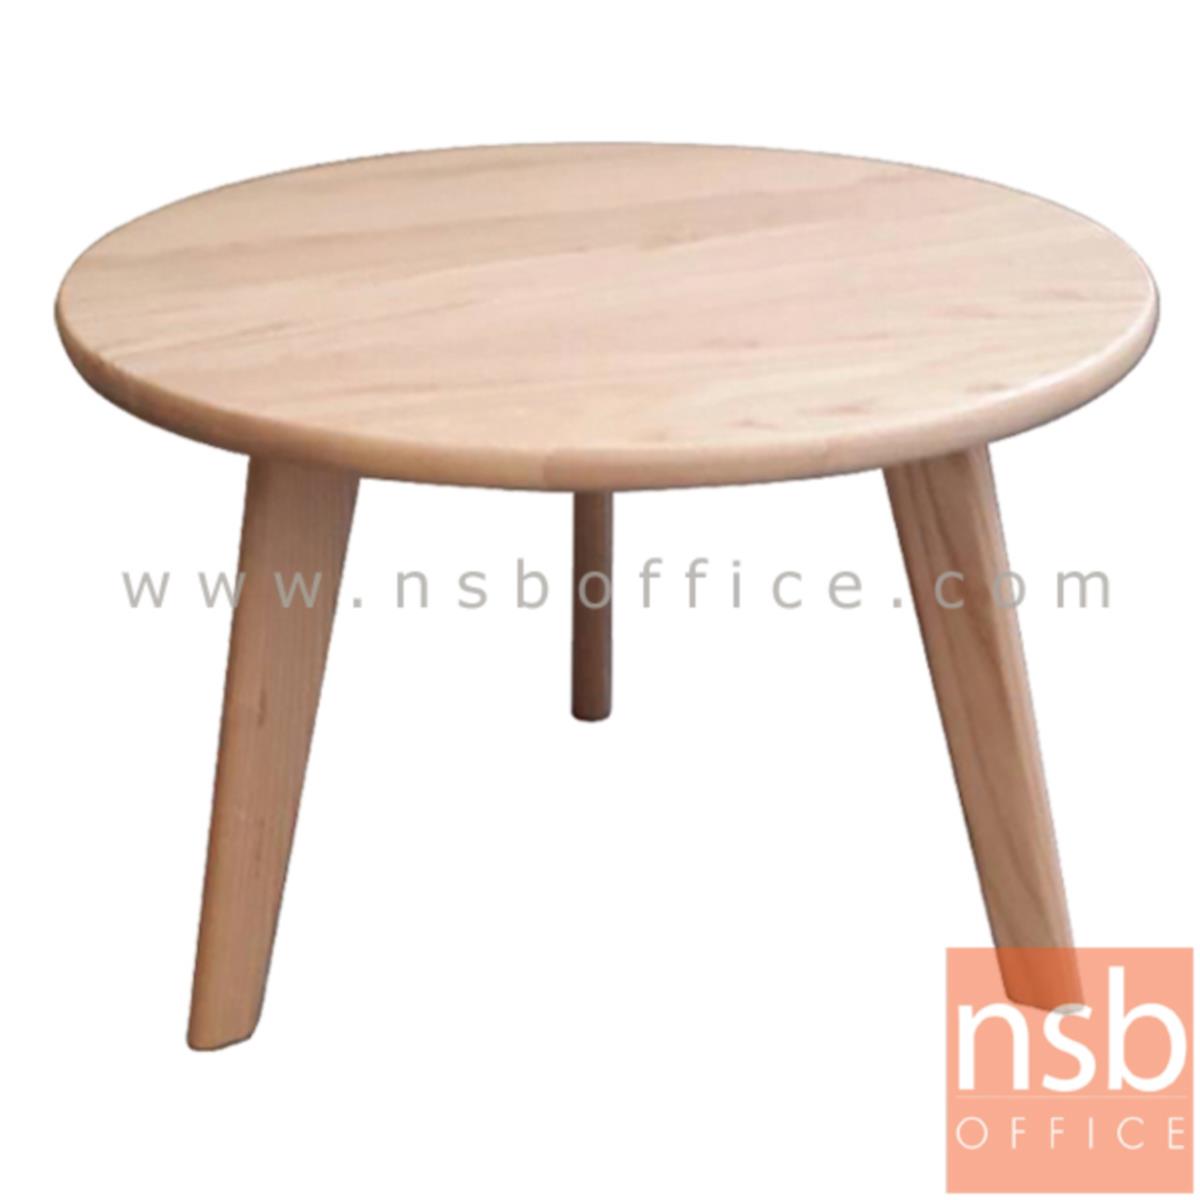 B13A206:โต๊ะกลางกลมไม้ รุ่น Bamboa (แบมโบ) ขนาด 60Di cm. 